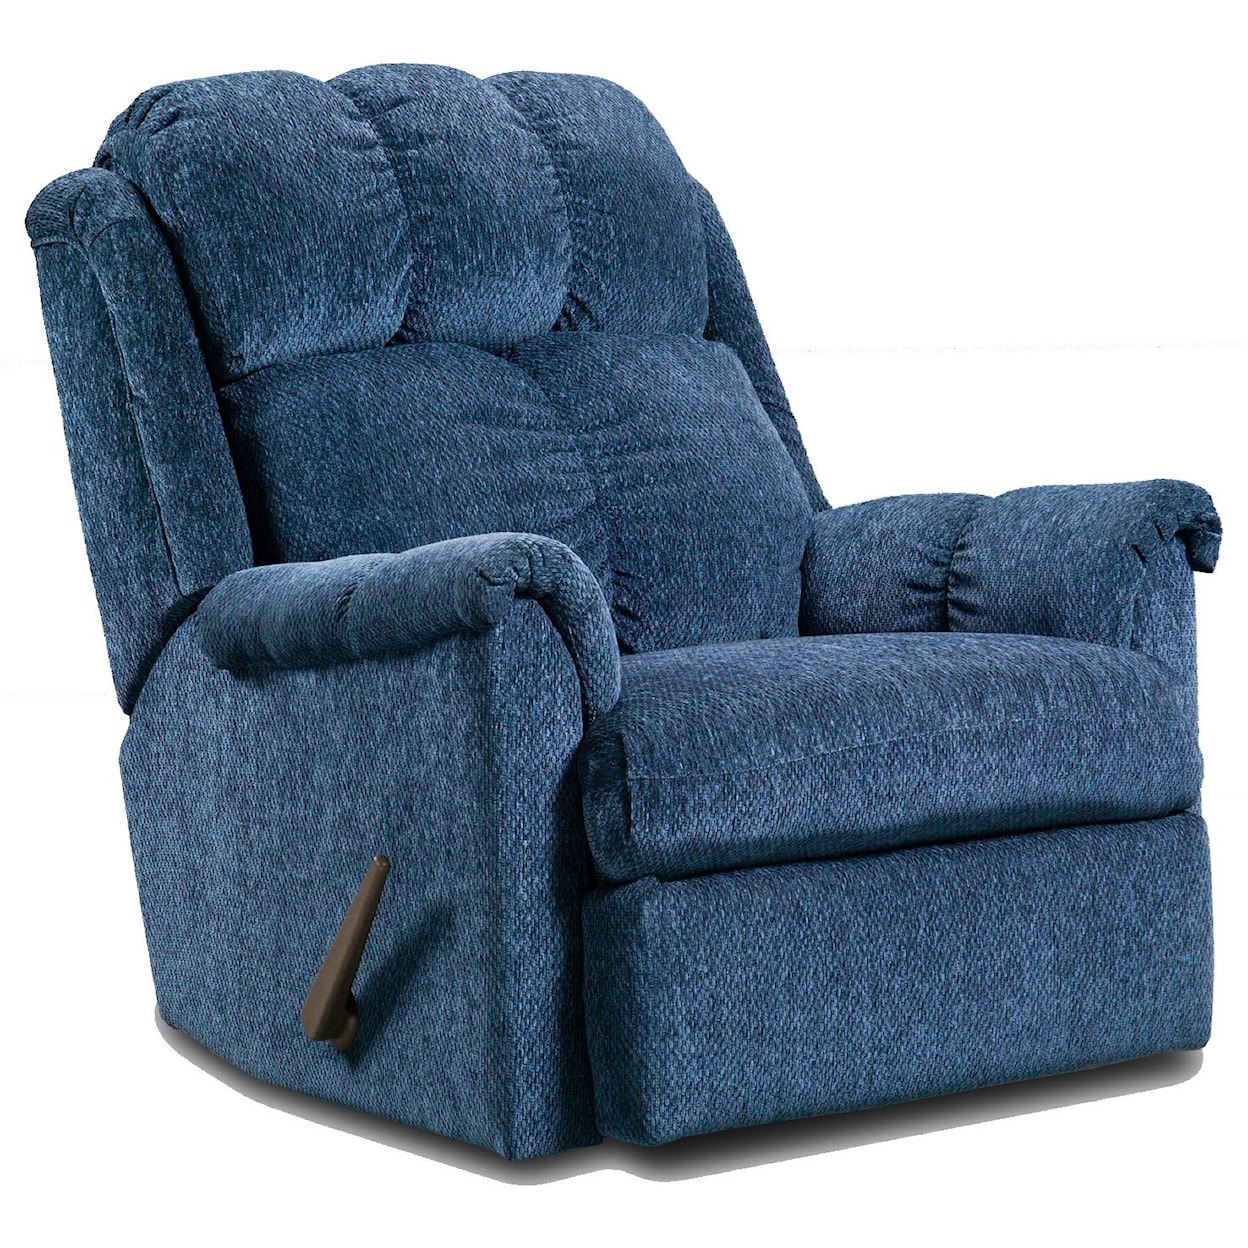 Affordable Furniture Tahoe Recliners TAHOE BLUE RECLINER |